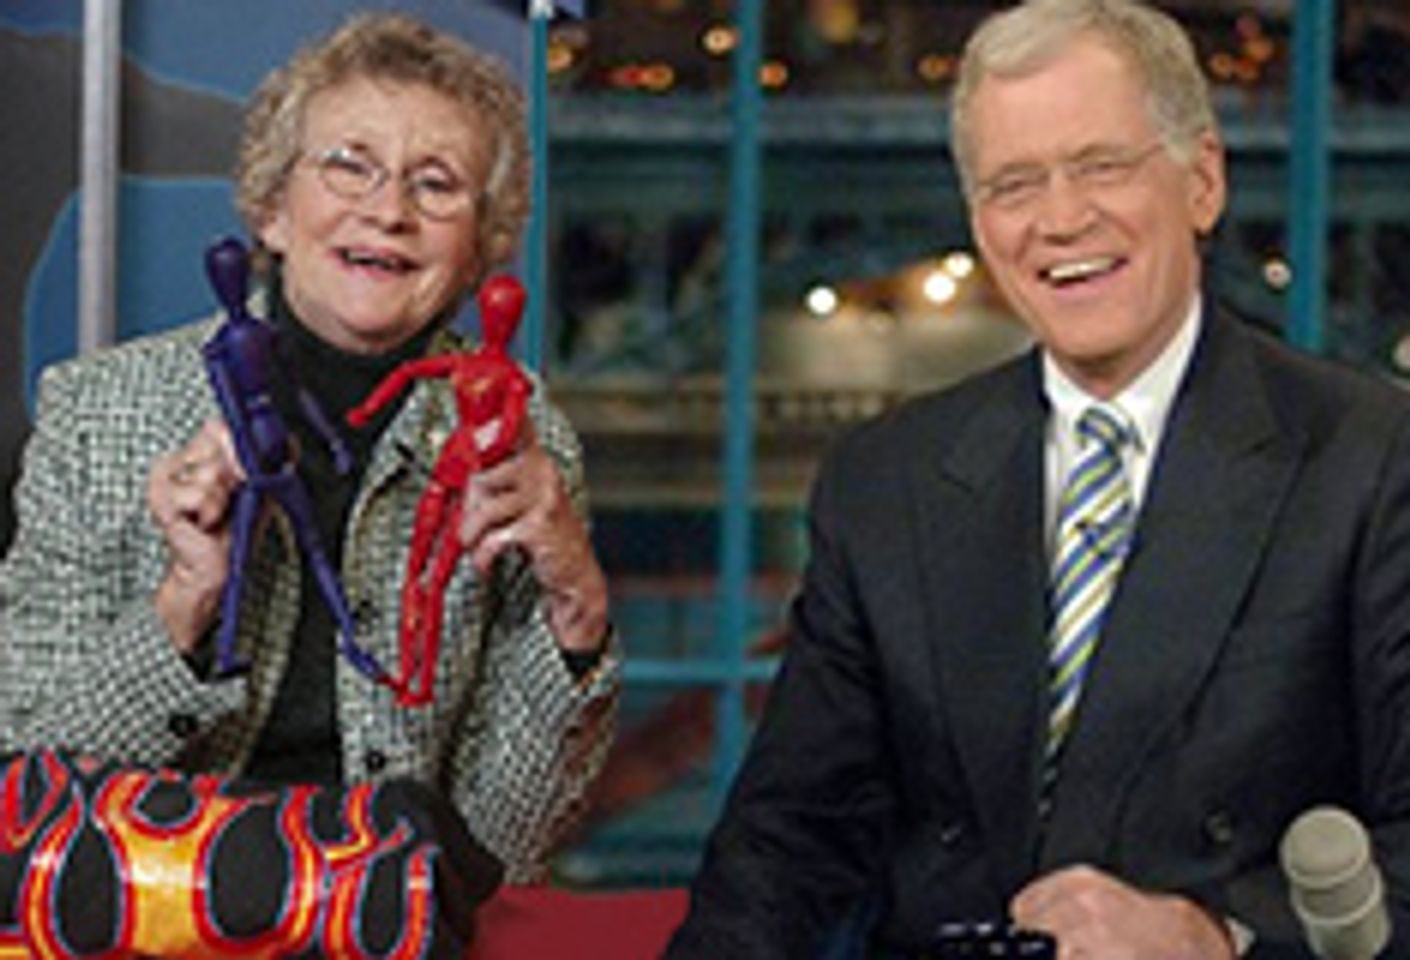 Sue Johanson to Appear on ‘Letterman’